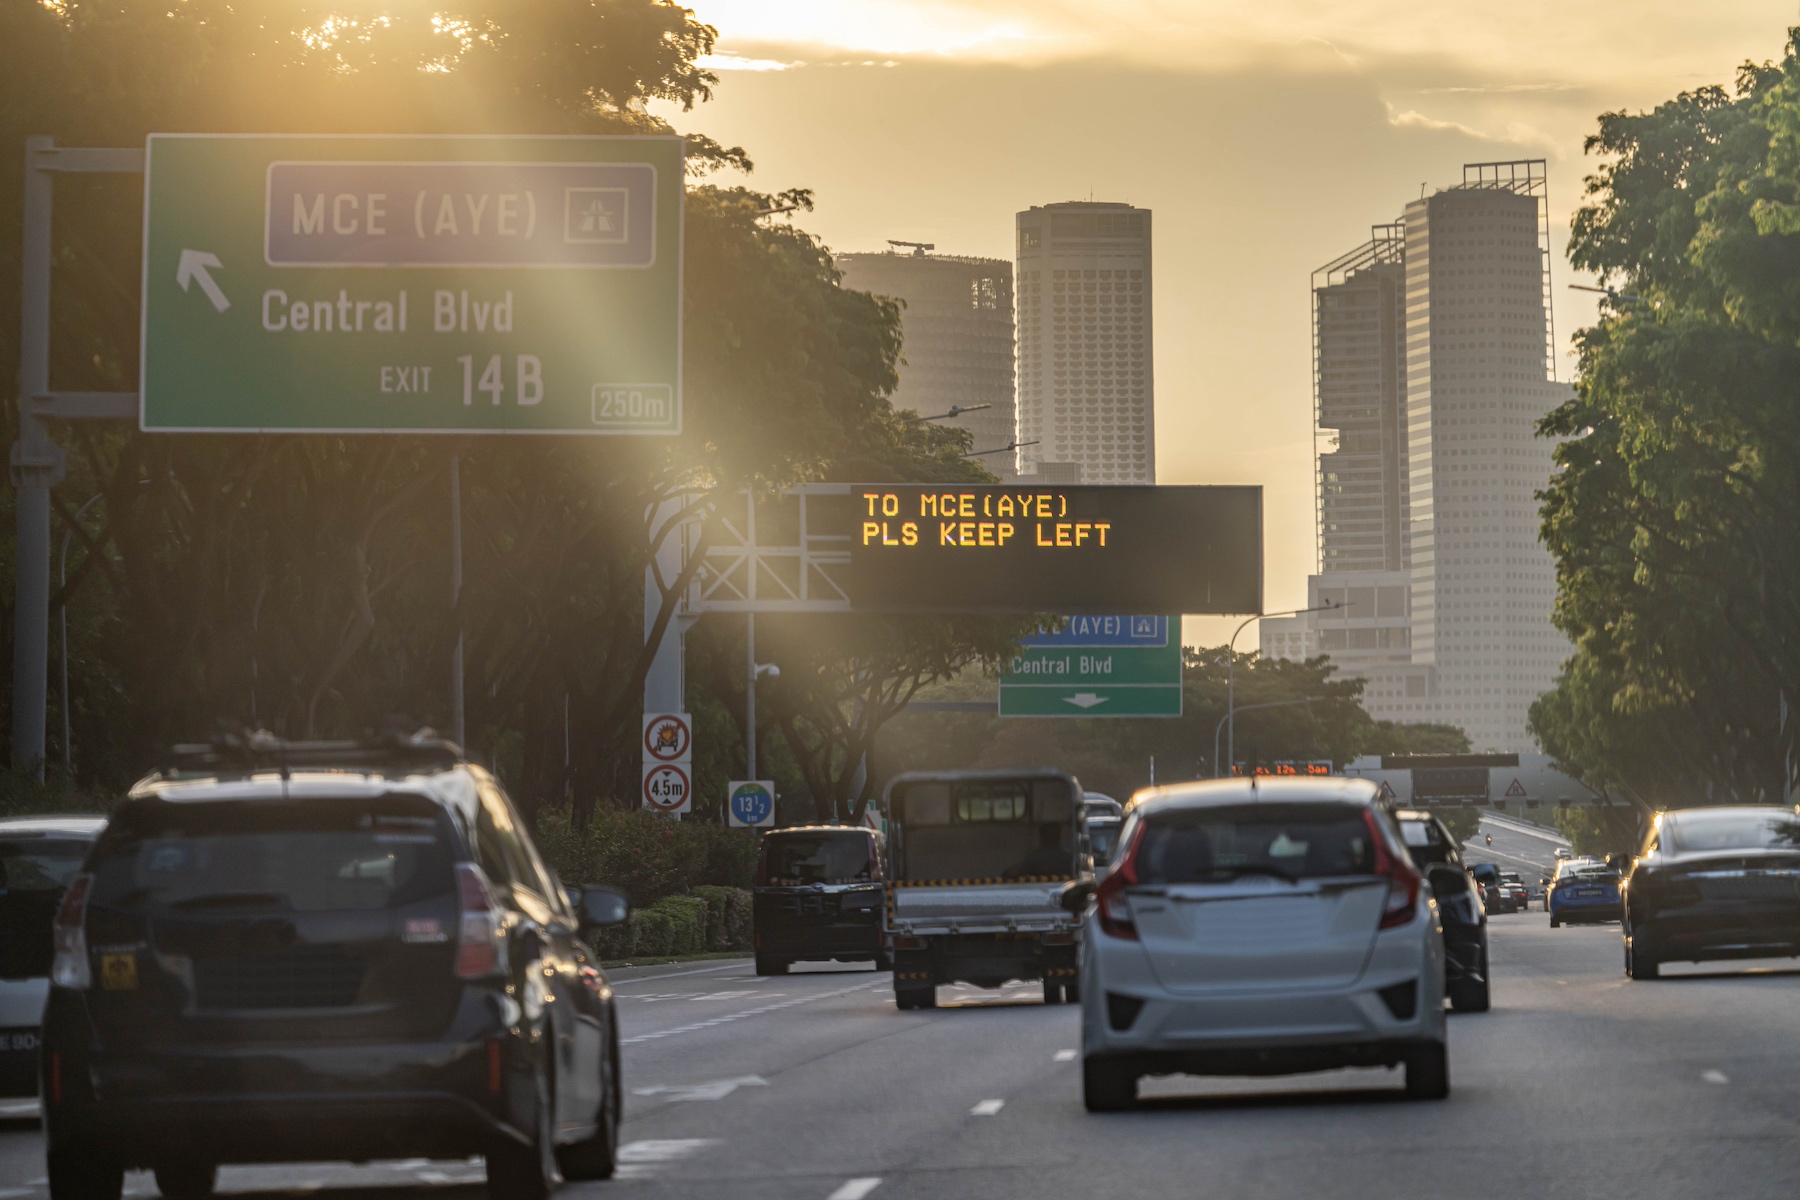 Commuter traffic on East Coast Parkway, Singapore around sunset